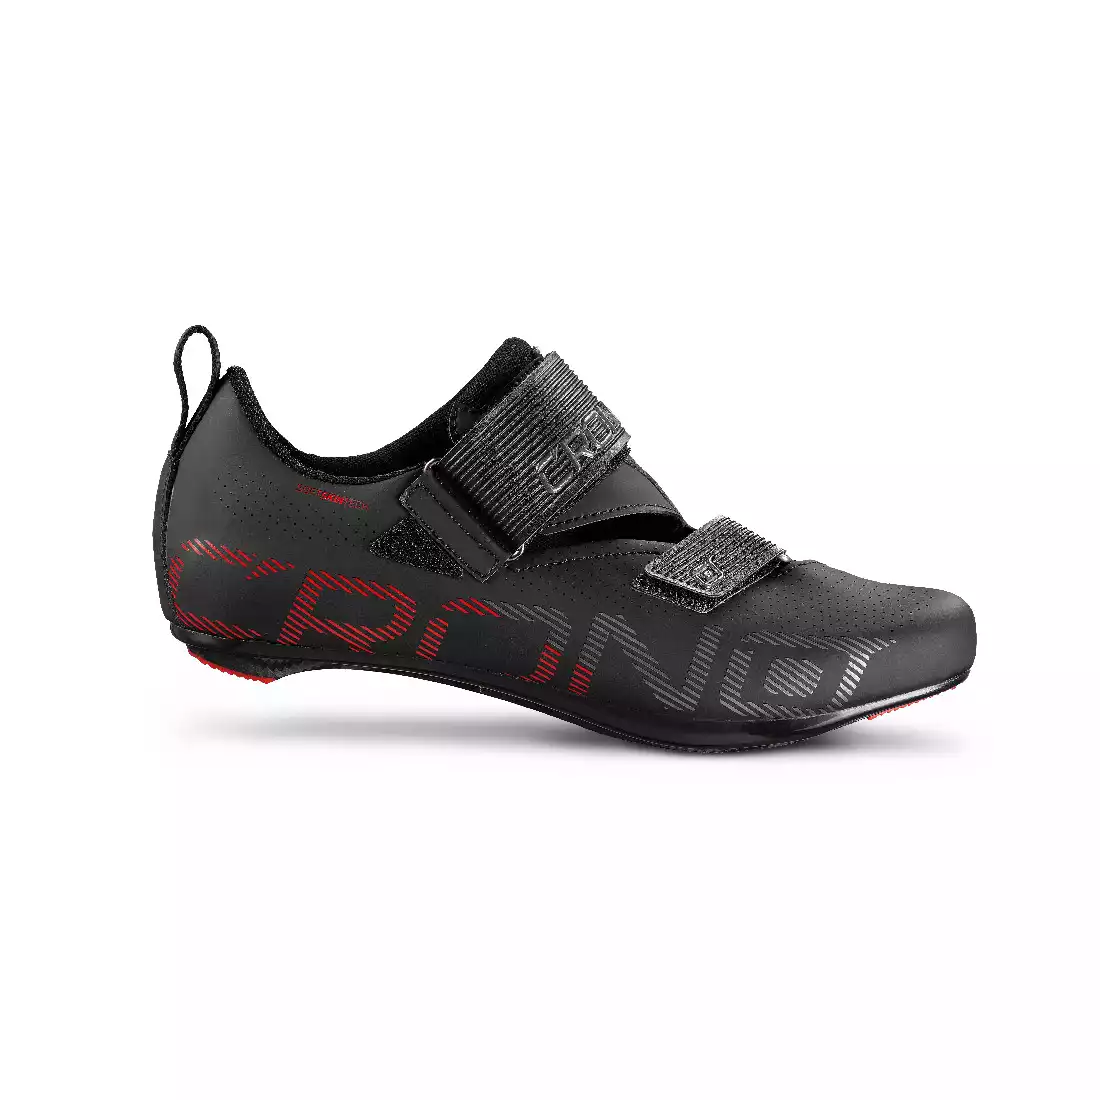 CRONO CT-1-20 Triathlon cycling shoes, composite, black